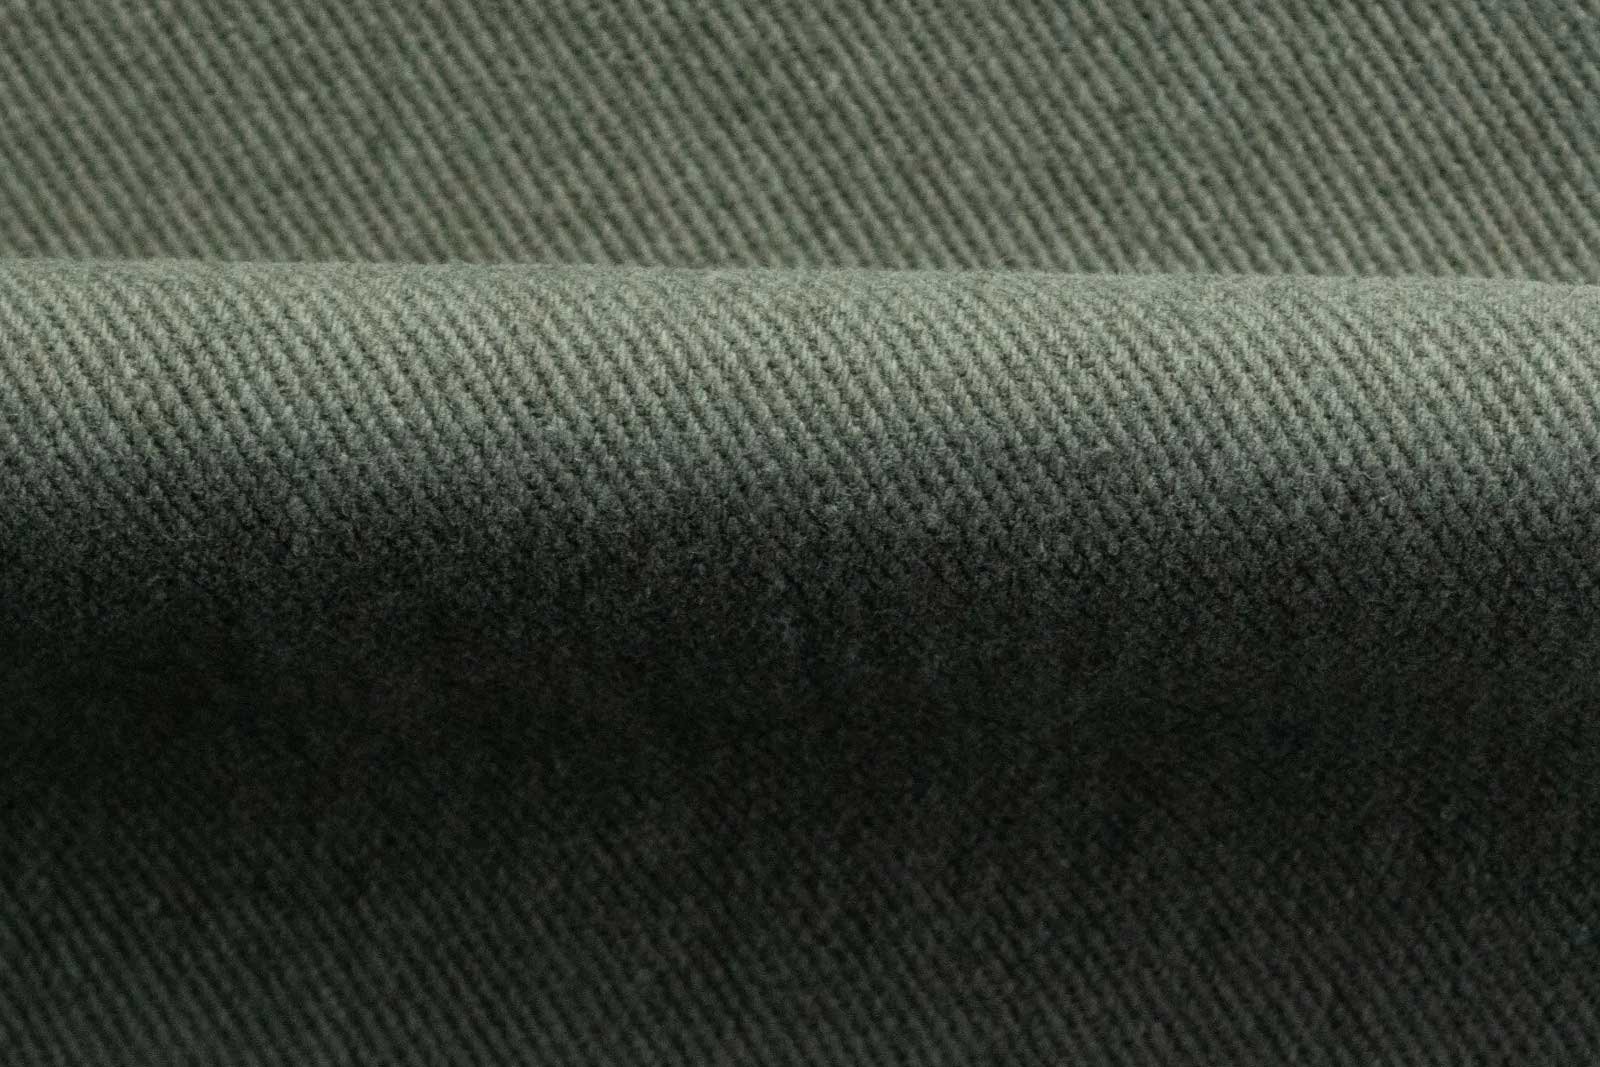 Chino/ Cotton Drill - Salong Textile, Malaysia Largest Fabric Distribution